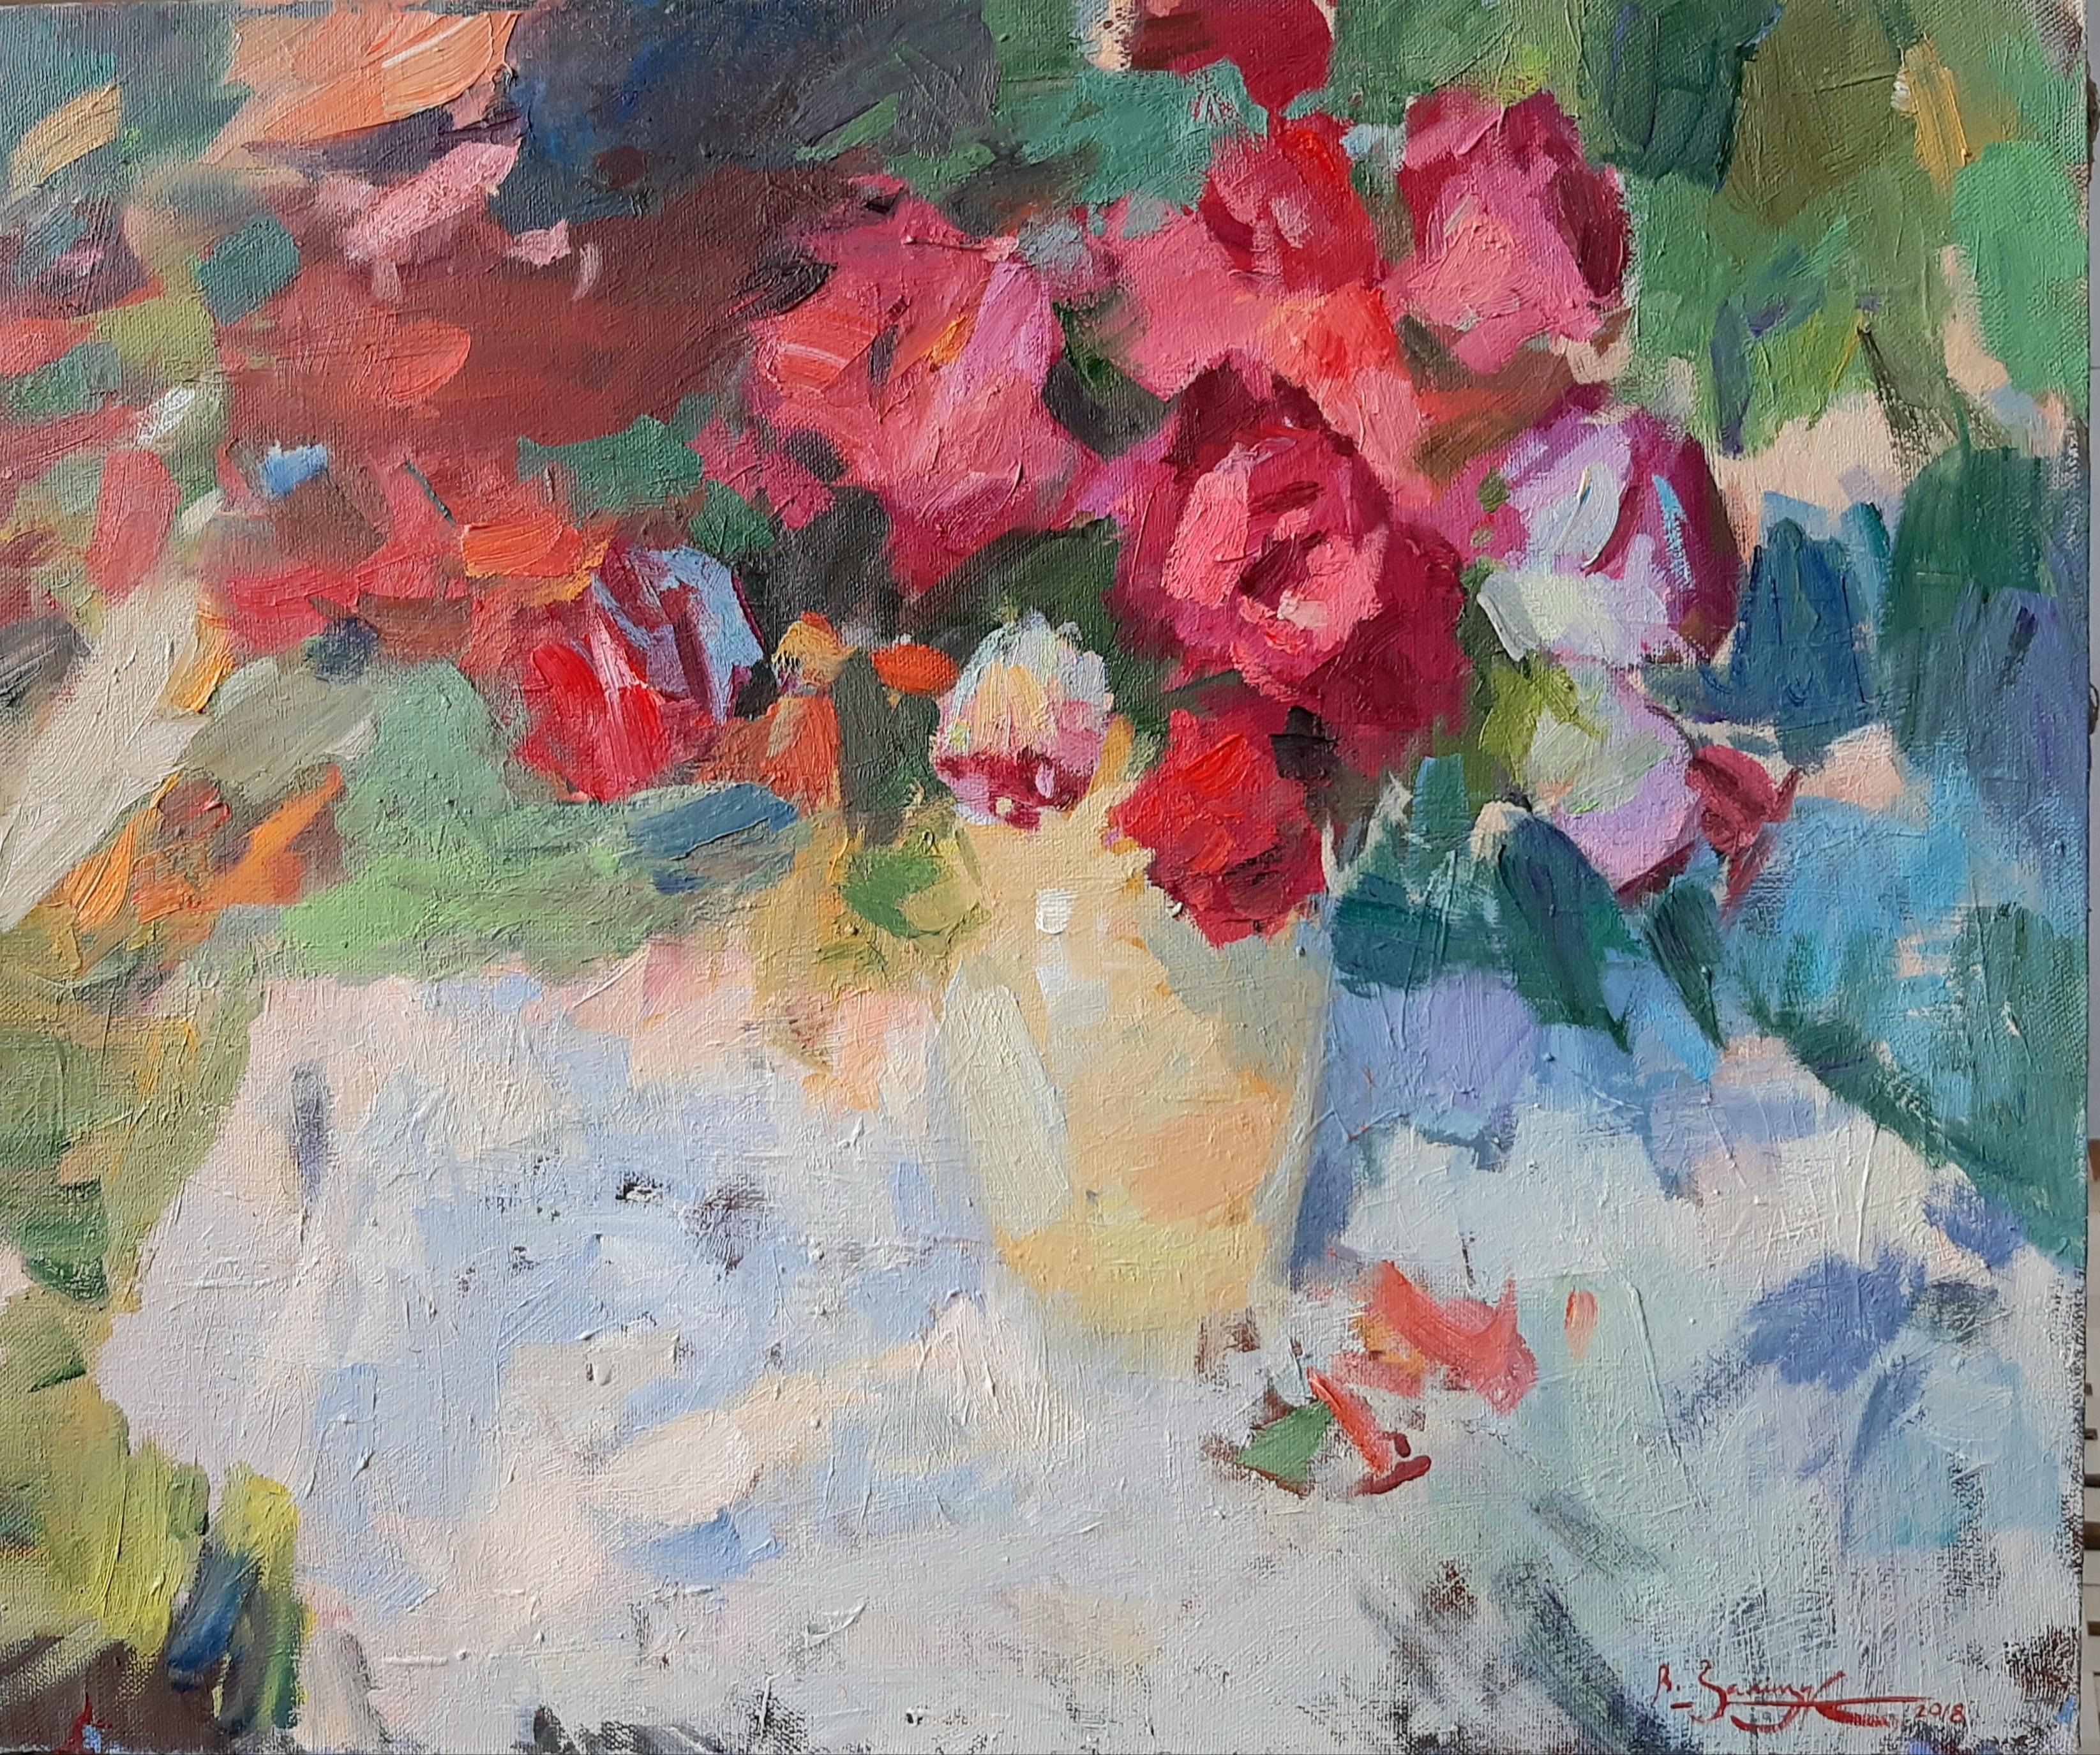 Valeriy Zalishchuk Still-Life Painting – July Roses - Stillleben, Ölgemälde auf Leinwand in Rot, Blau, Gelb, Grün, Weiß und Lila